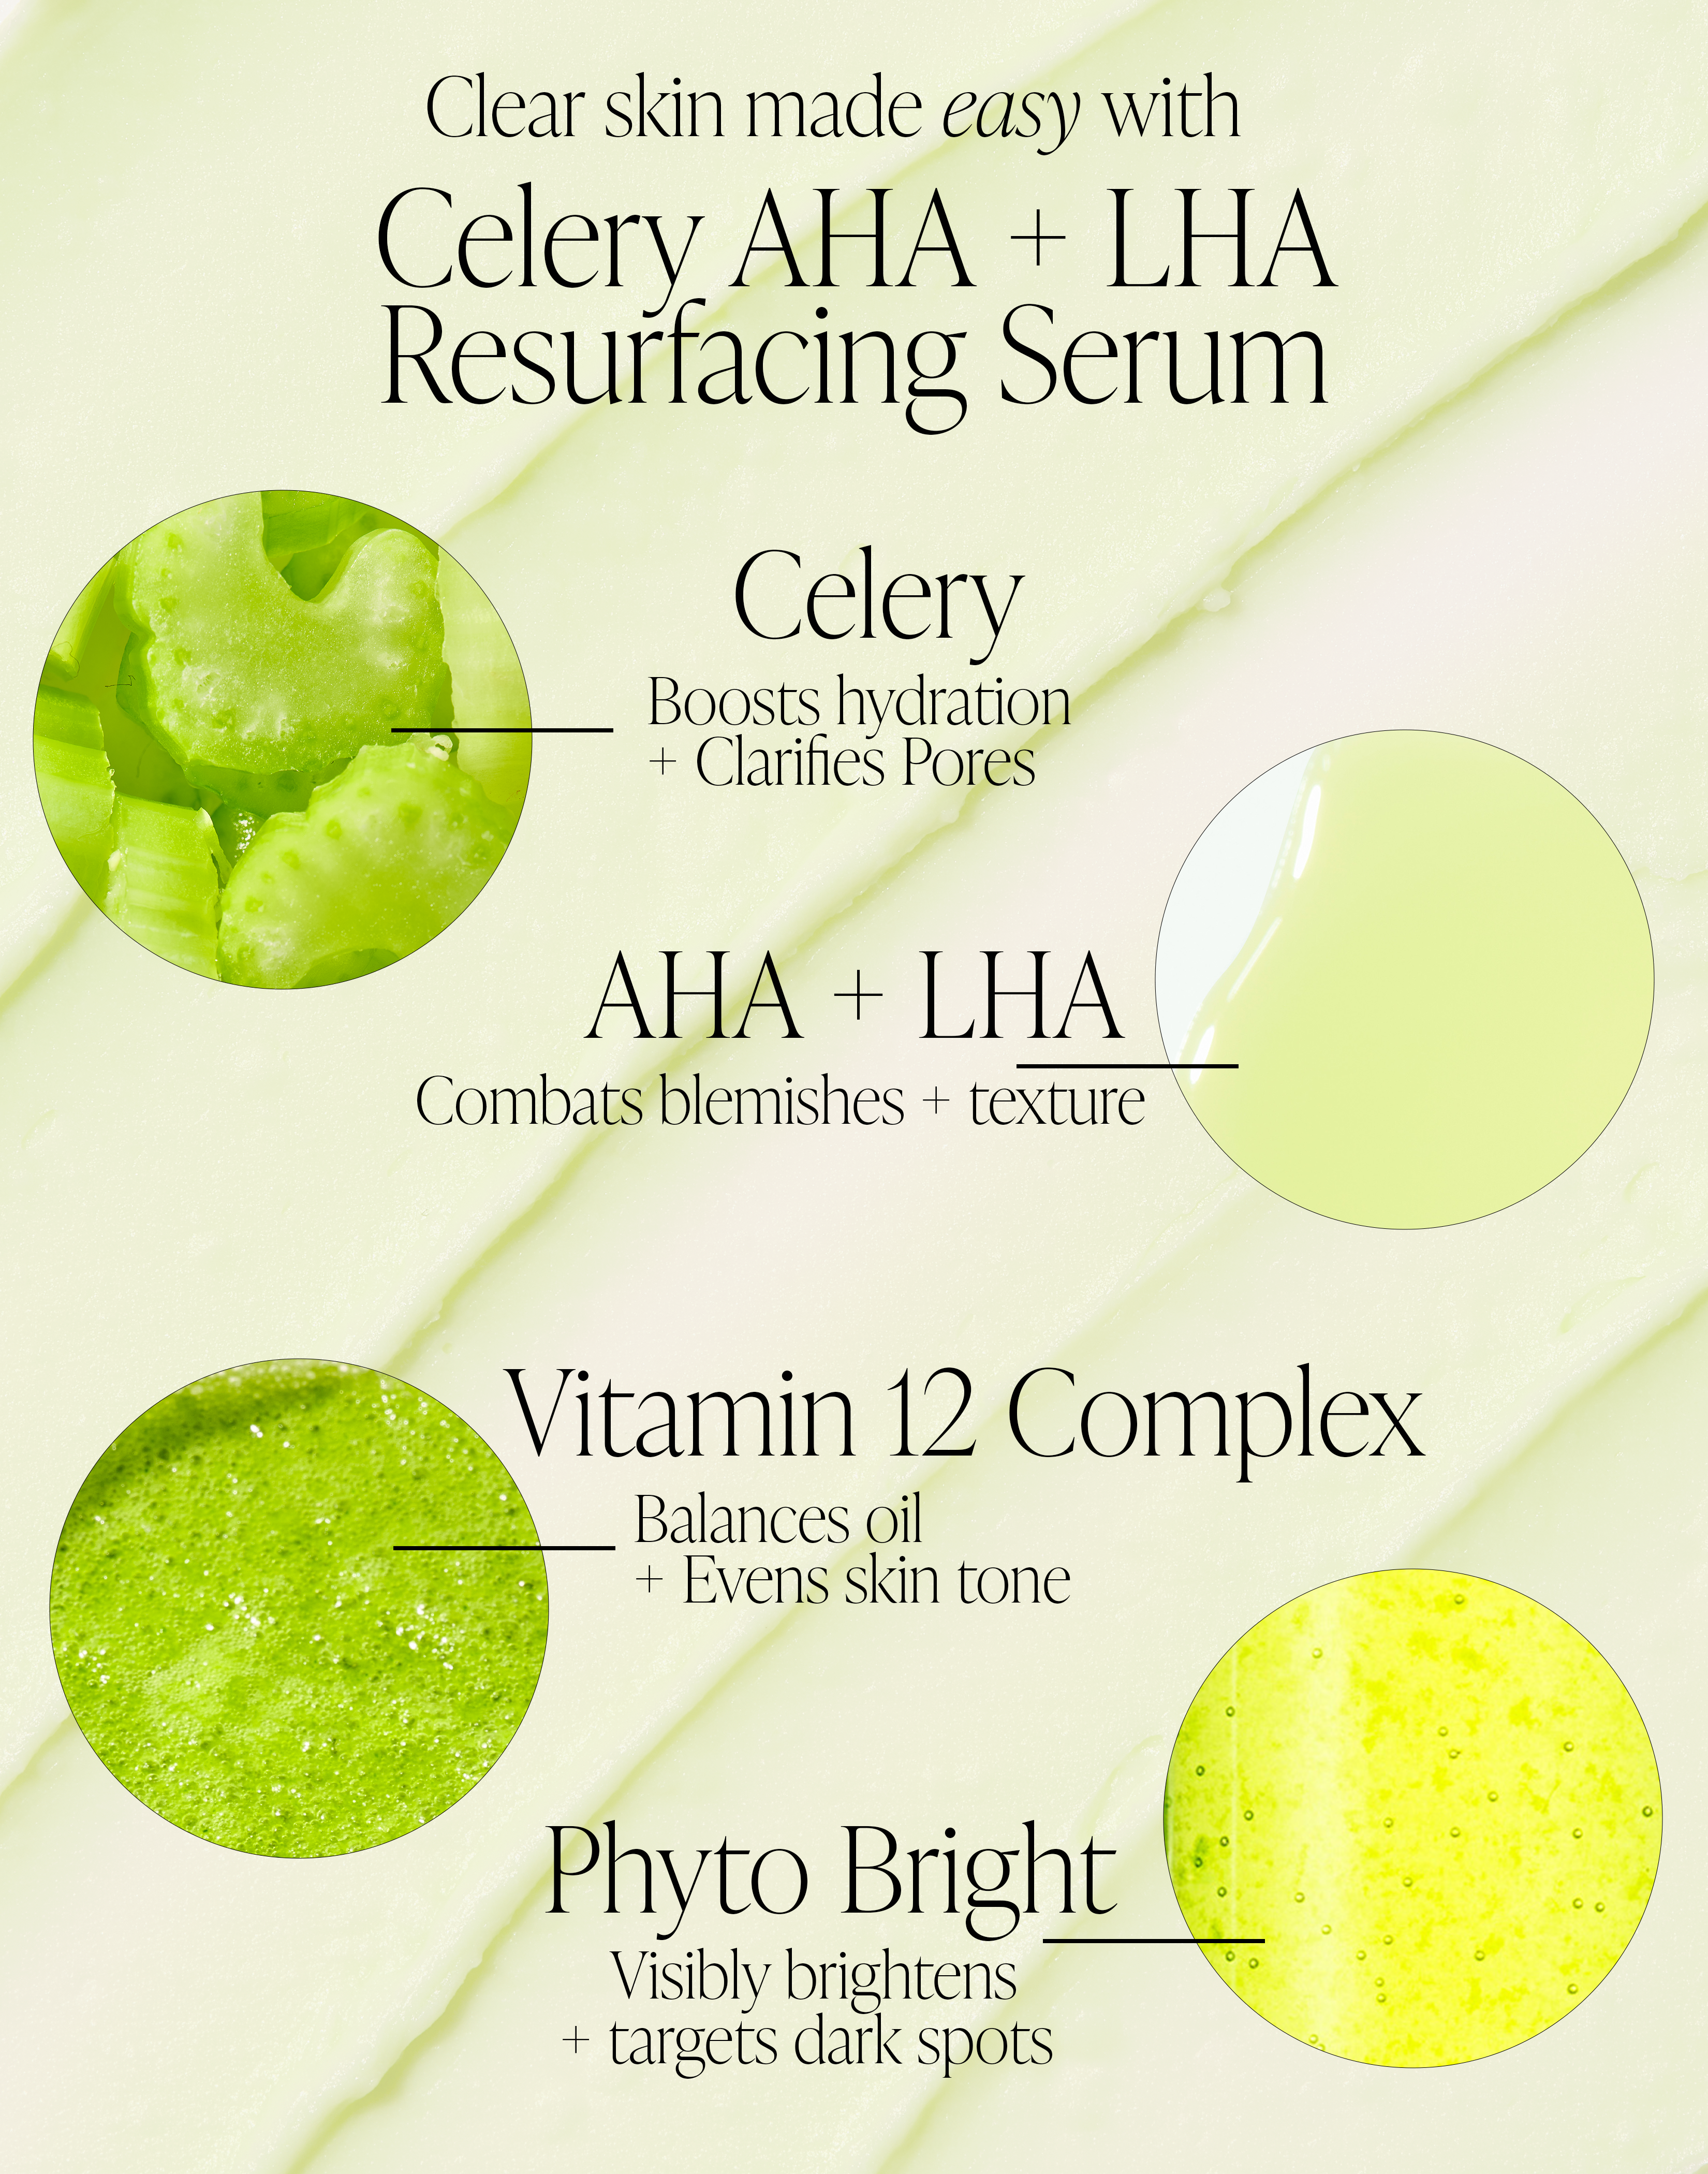 Celery AHA + LHA  Resurfacing Serum